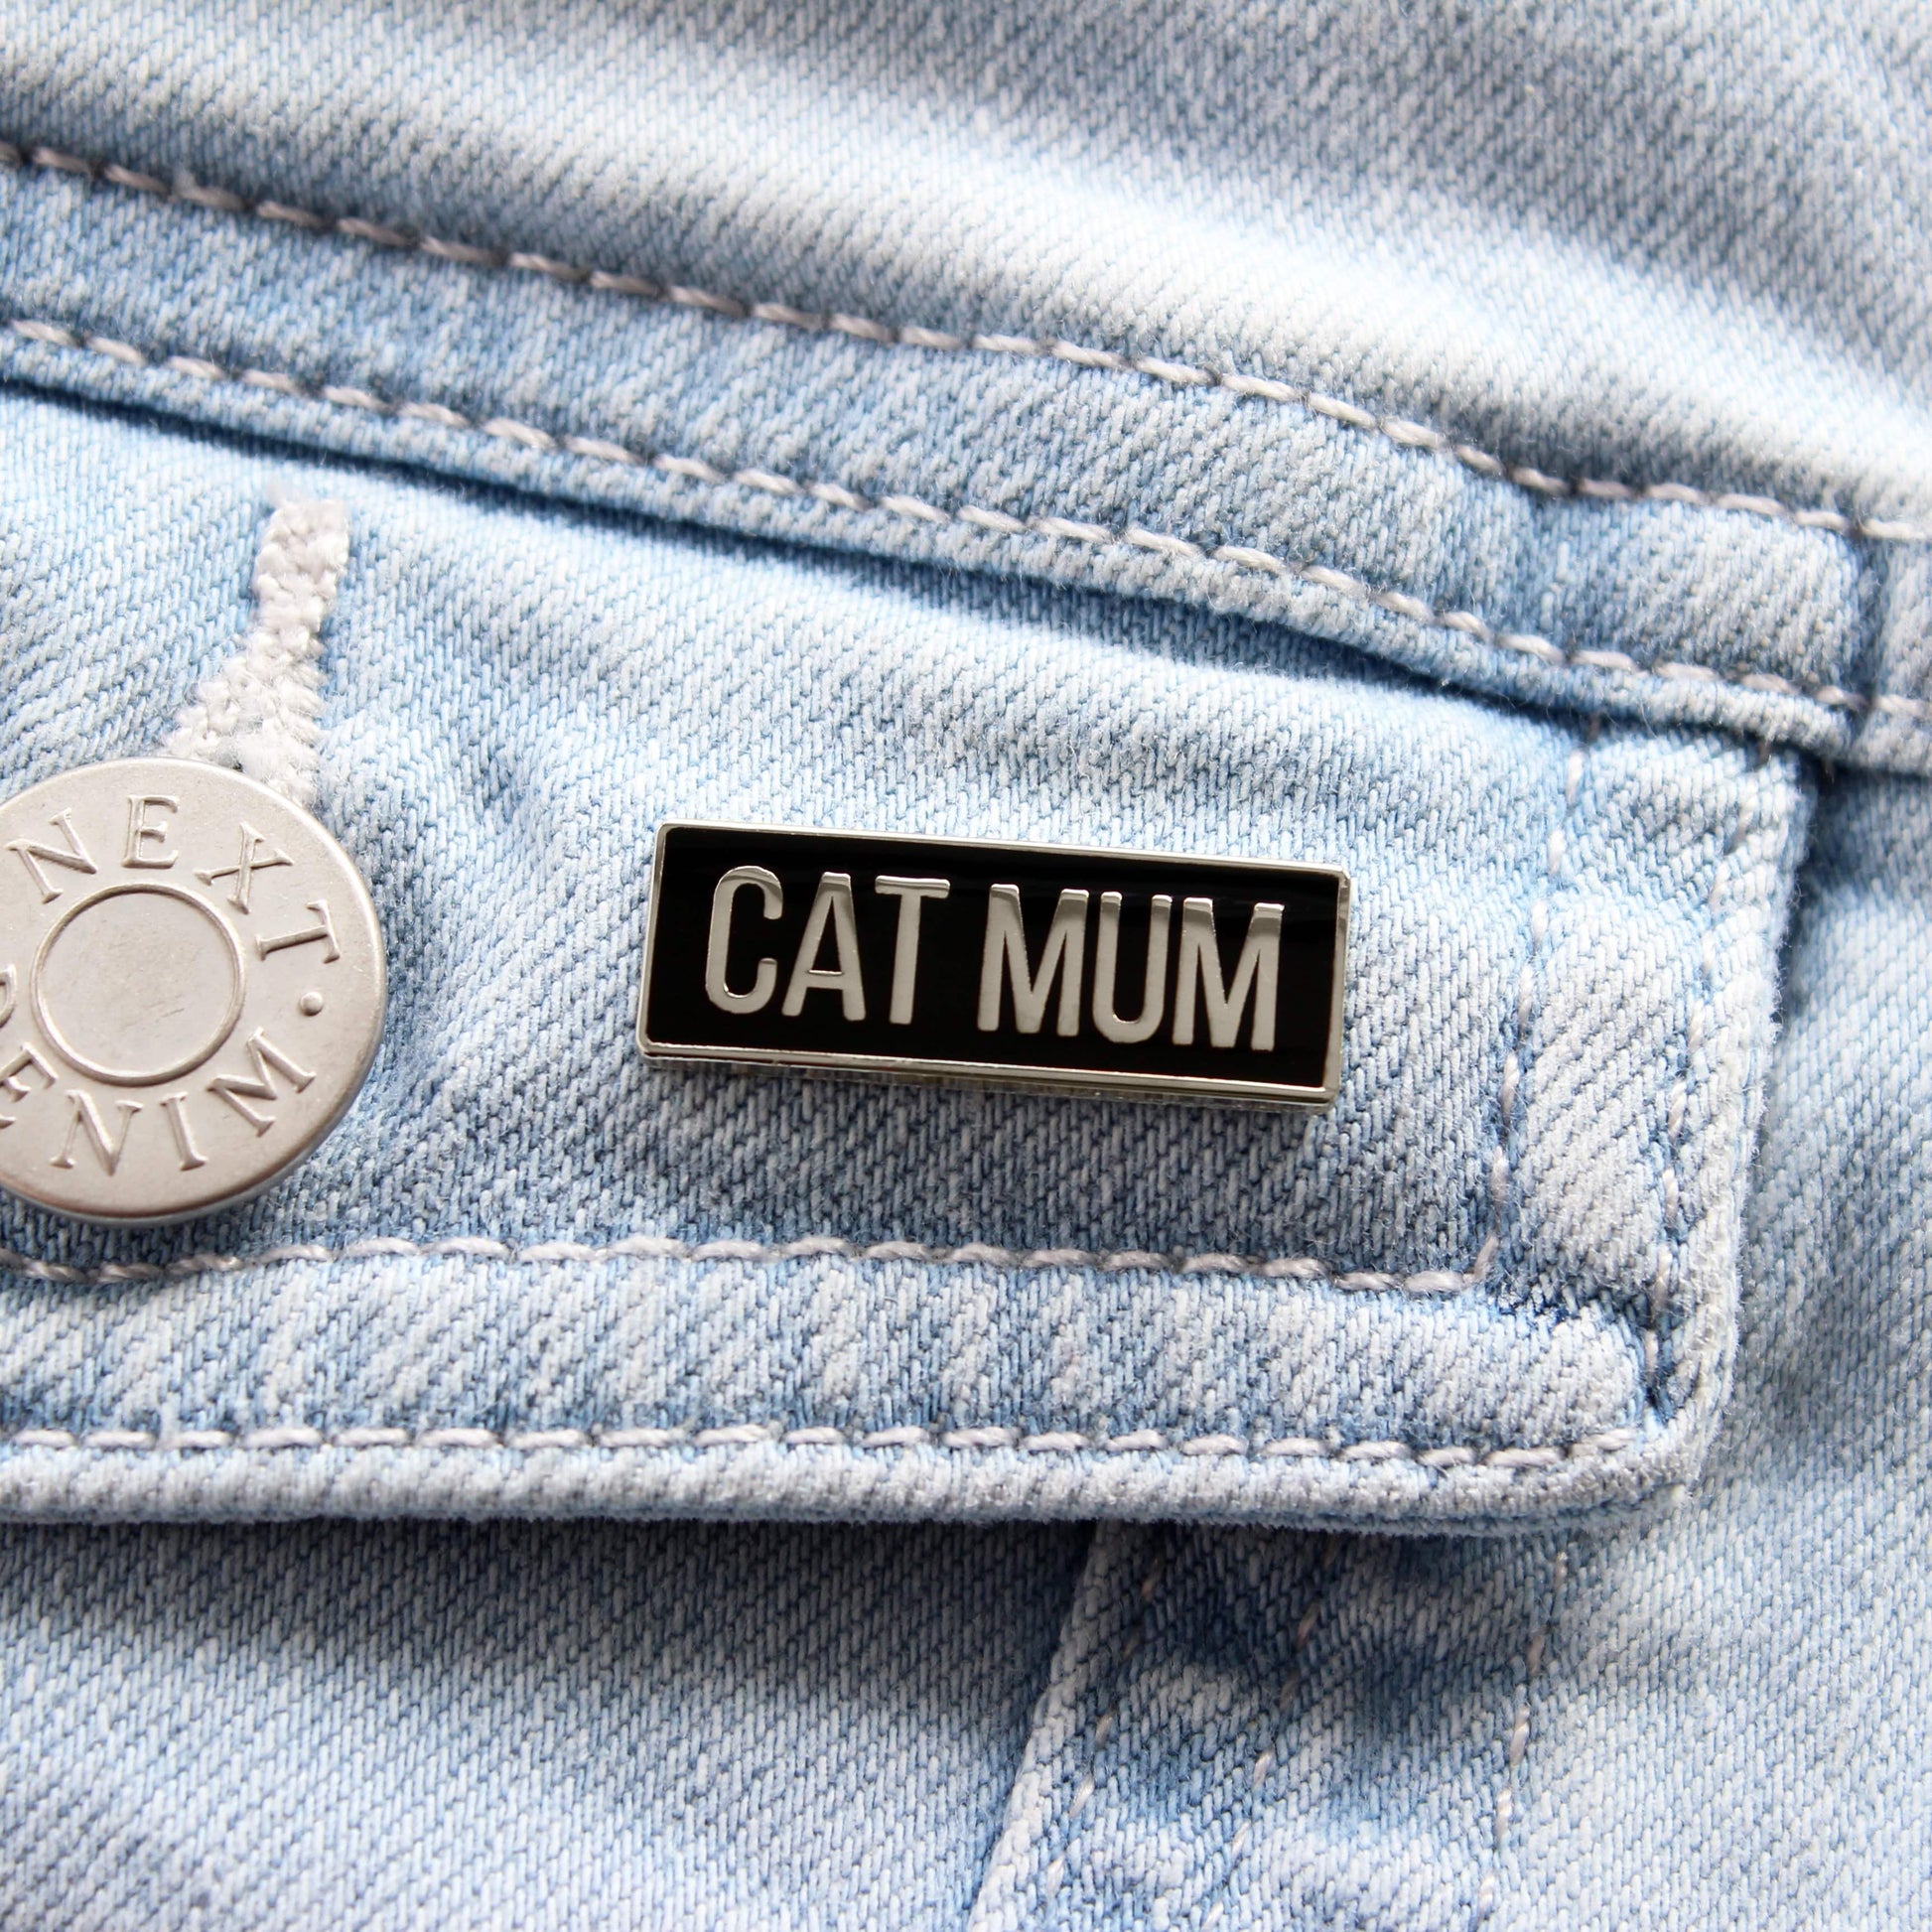 Cat mum enamel pin badge from Purple Tree Designs